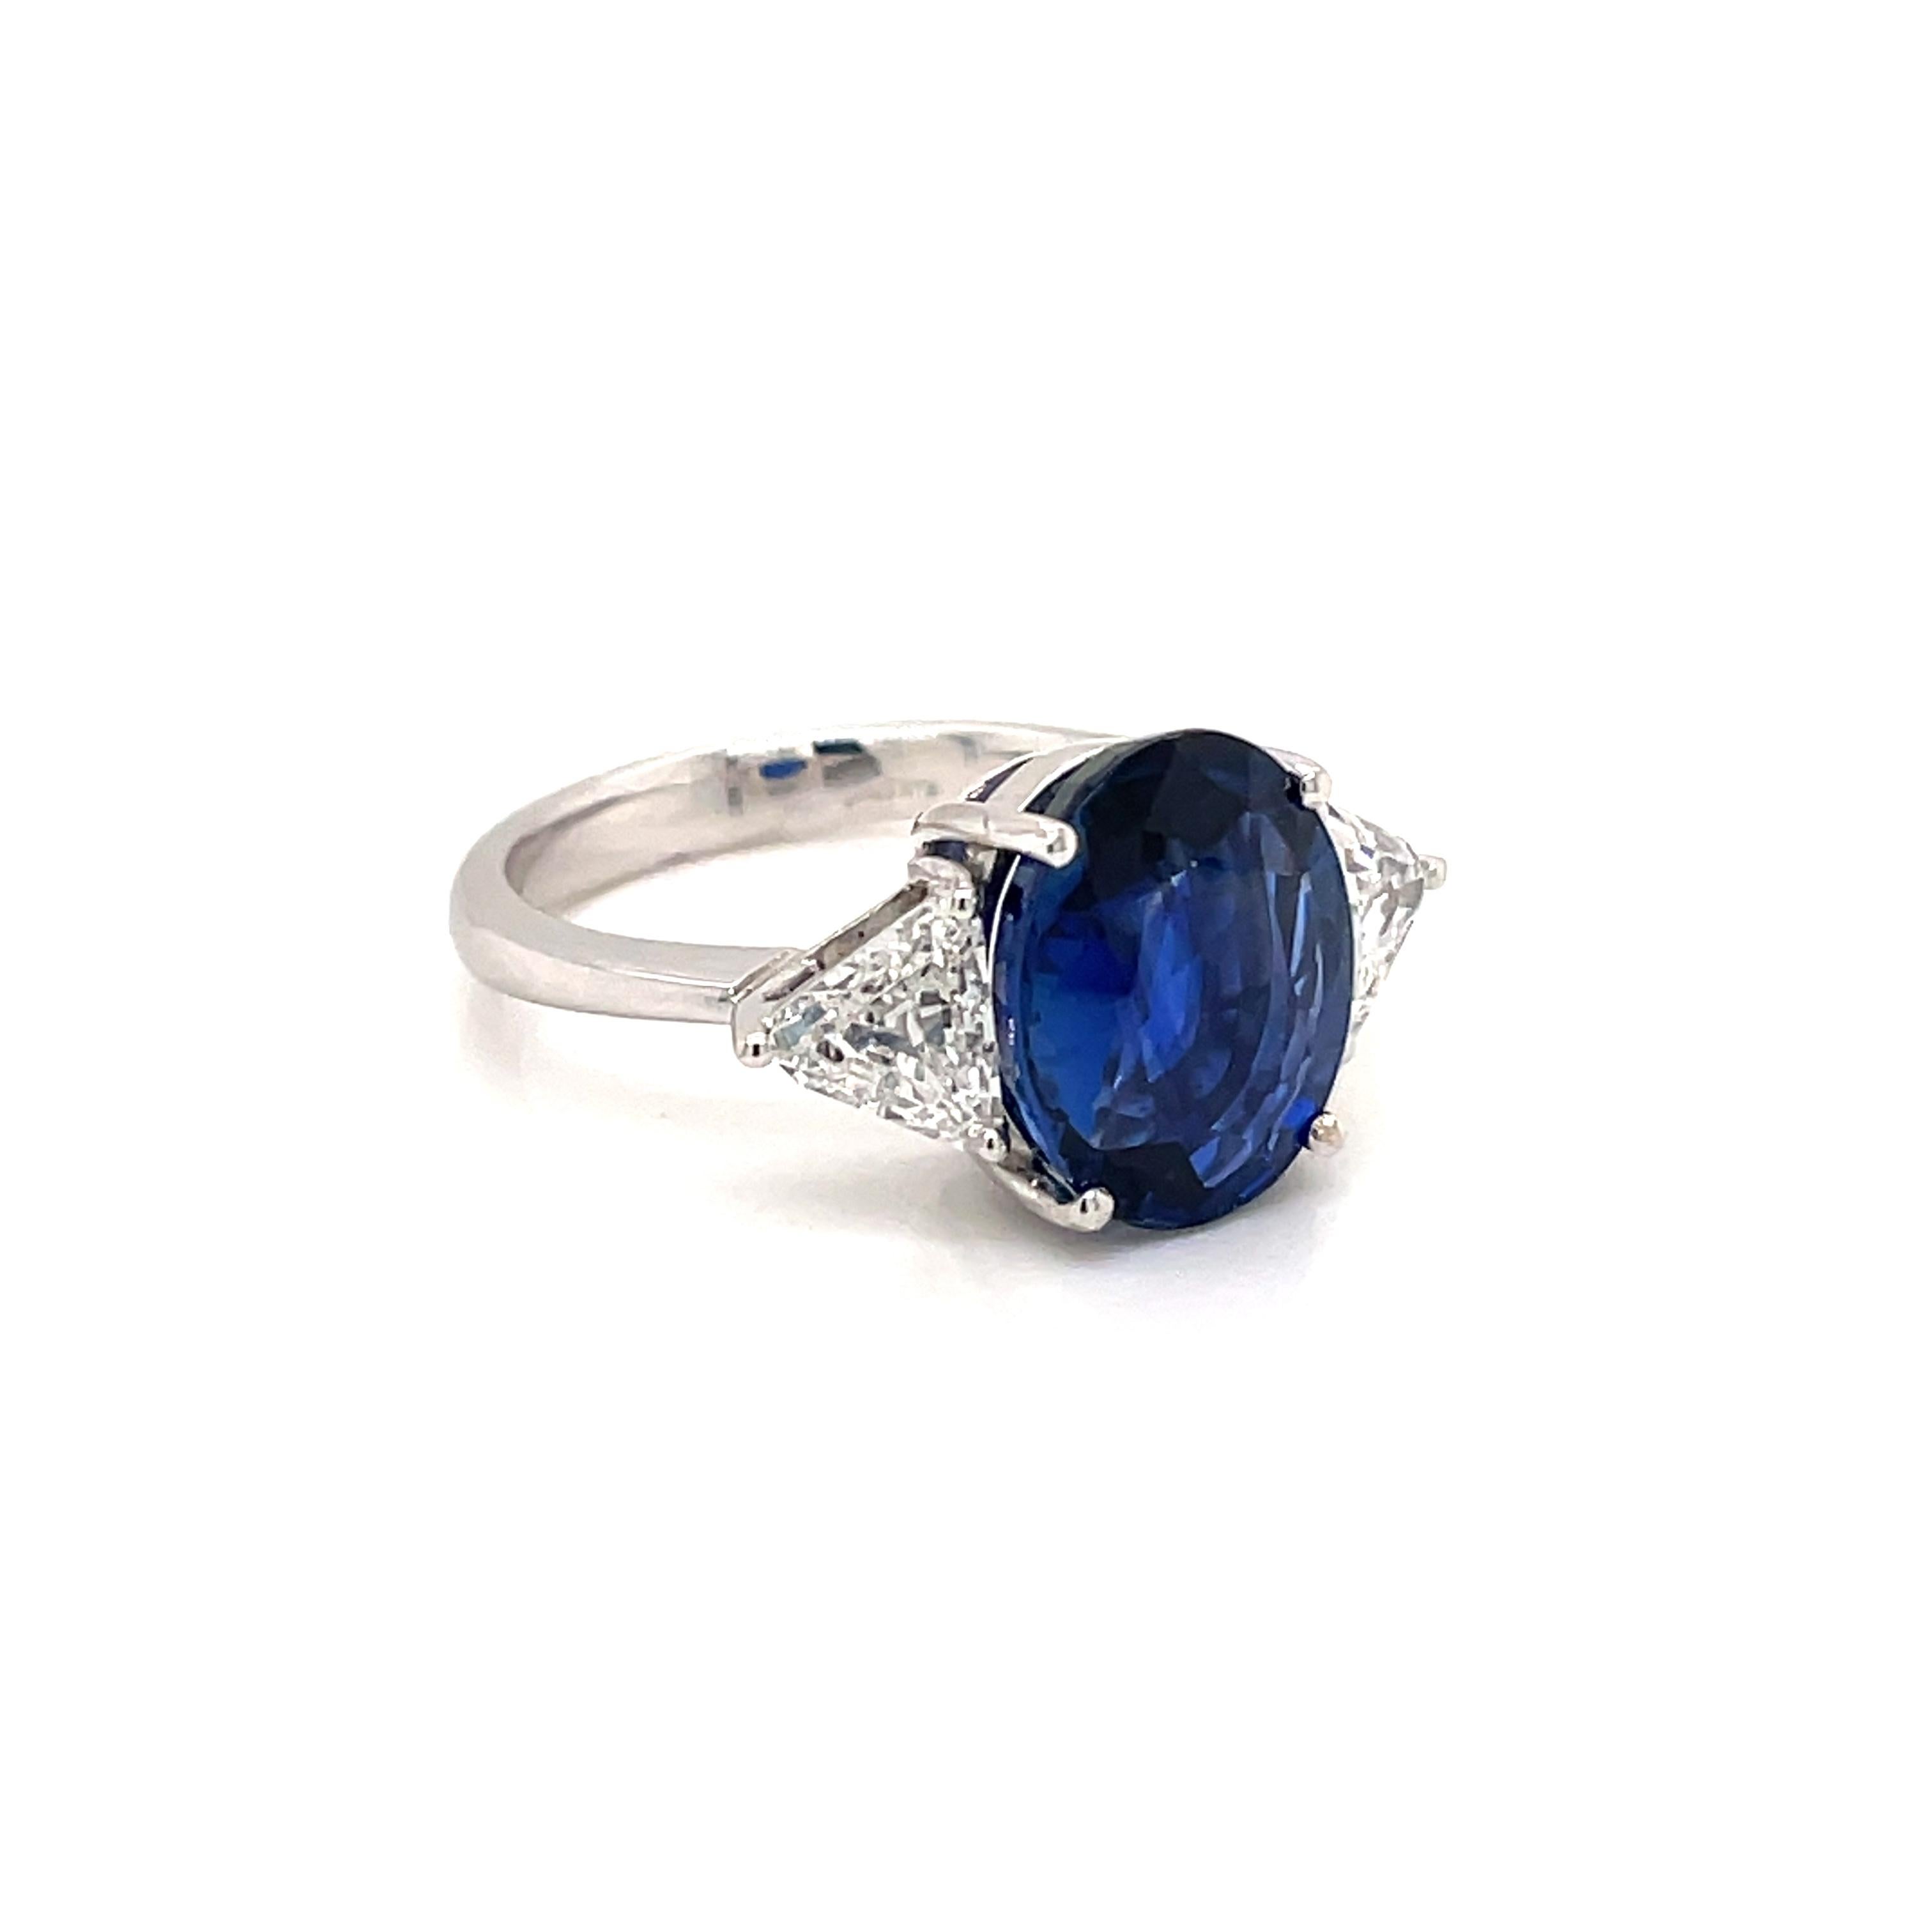 Women's Vintage Certified 6 Carat Unheated Burma Sapphire Diamond Engagement Ring